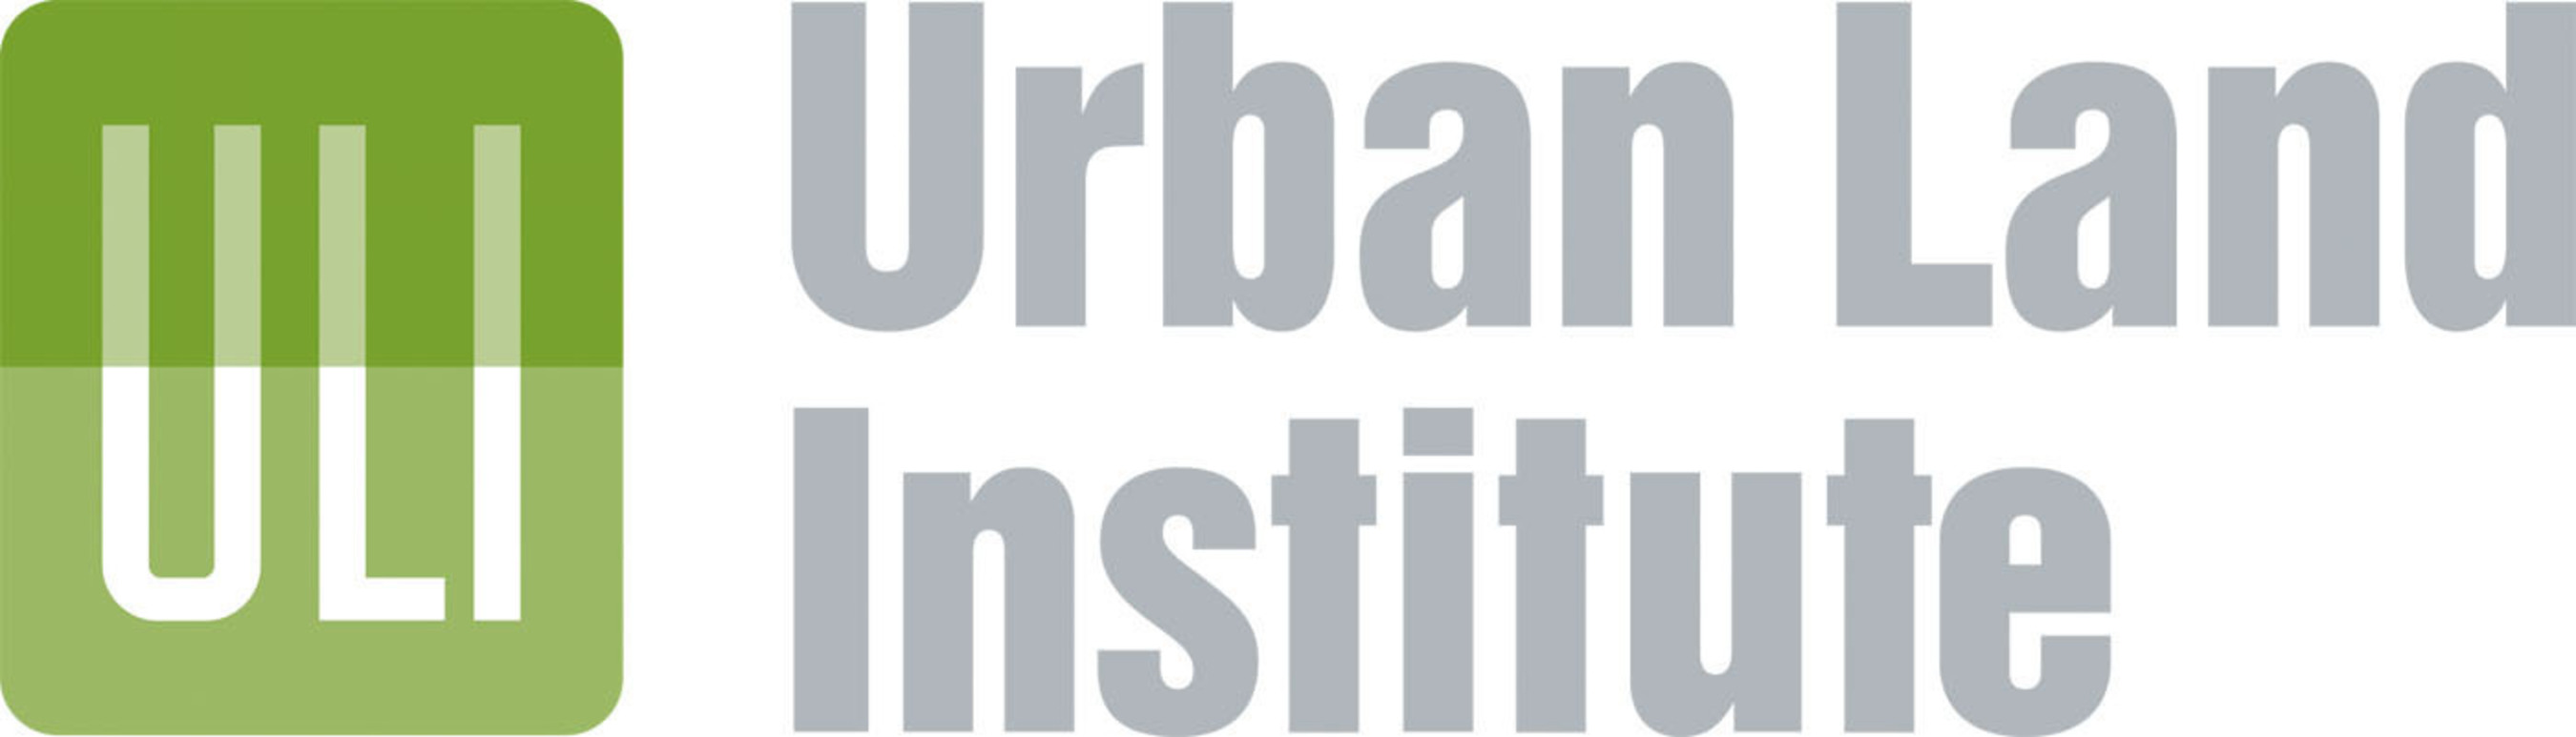 Urban Land Institute Logo. (PRNewsFoto/Urban Land Institute) (PRNewsFoto/)